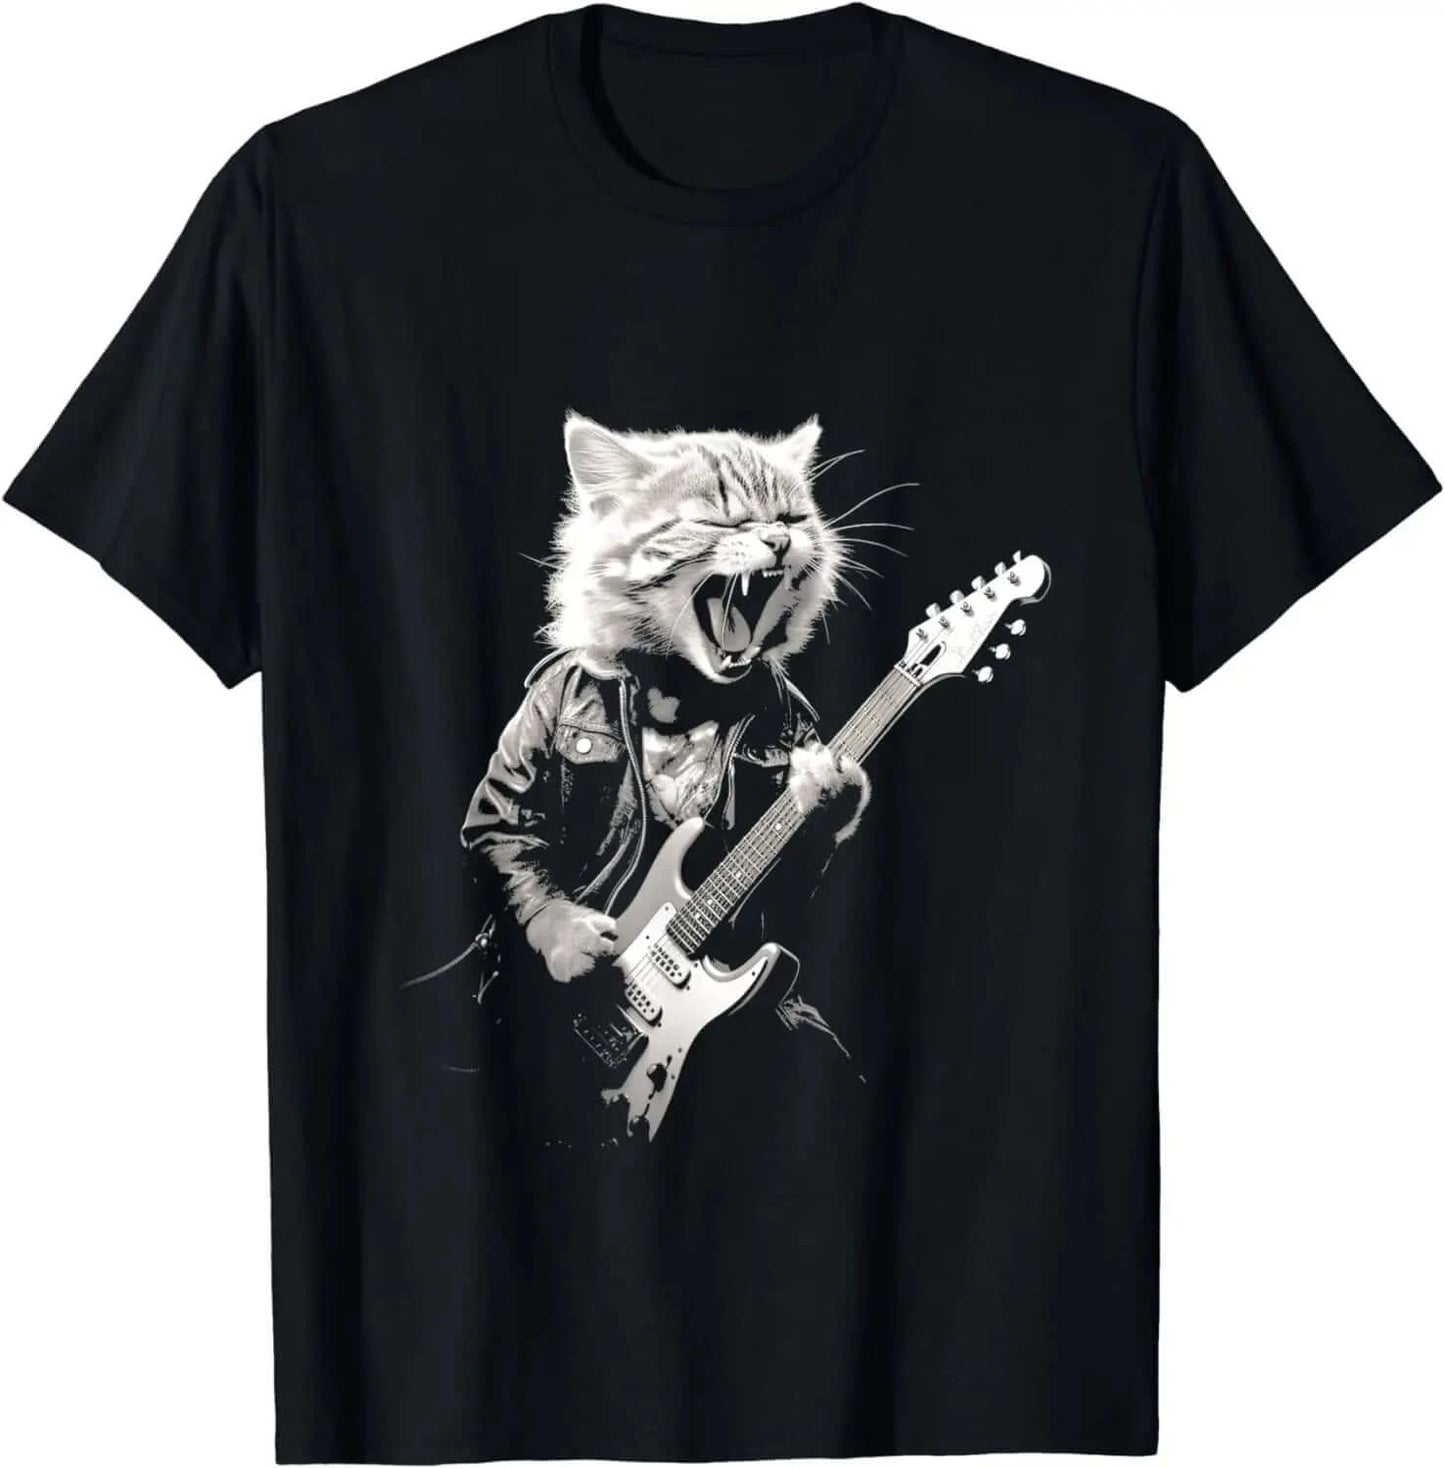 Rock Cat Playing Funny Guitar T-Shirt black3 guitarmetrics